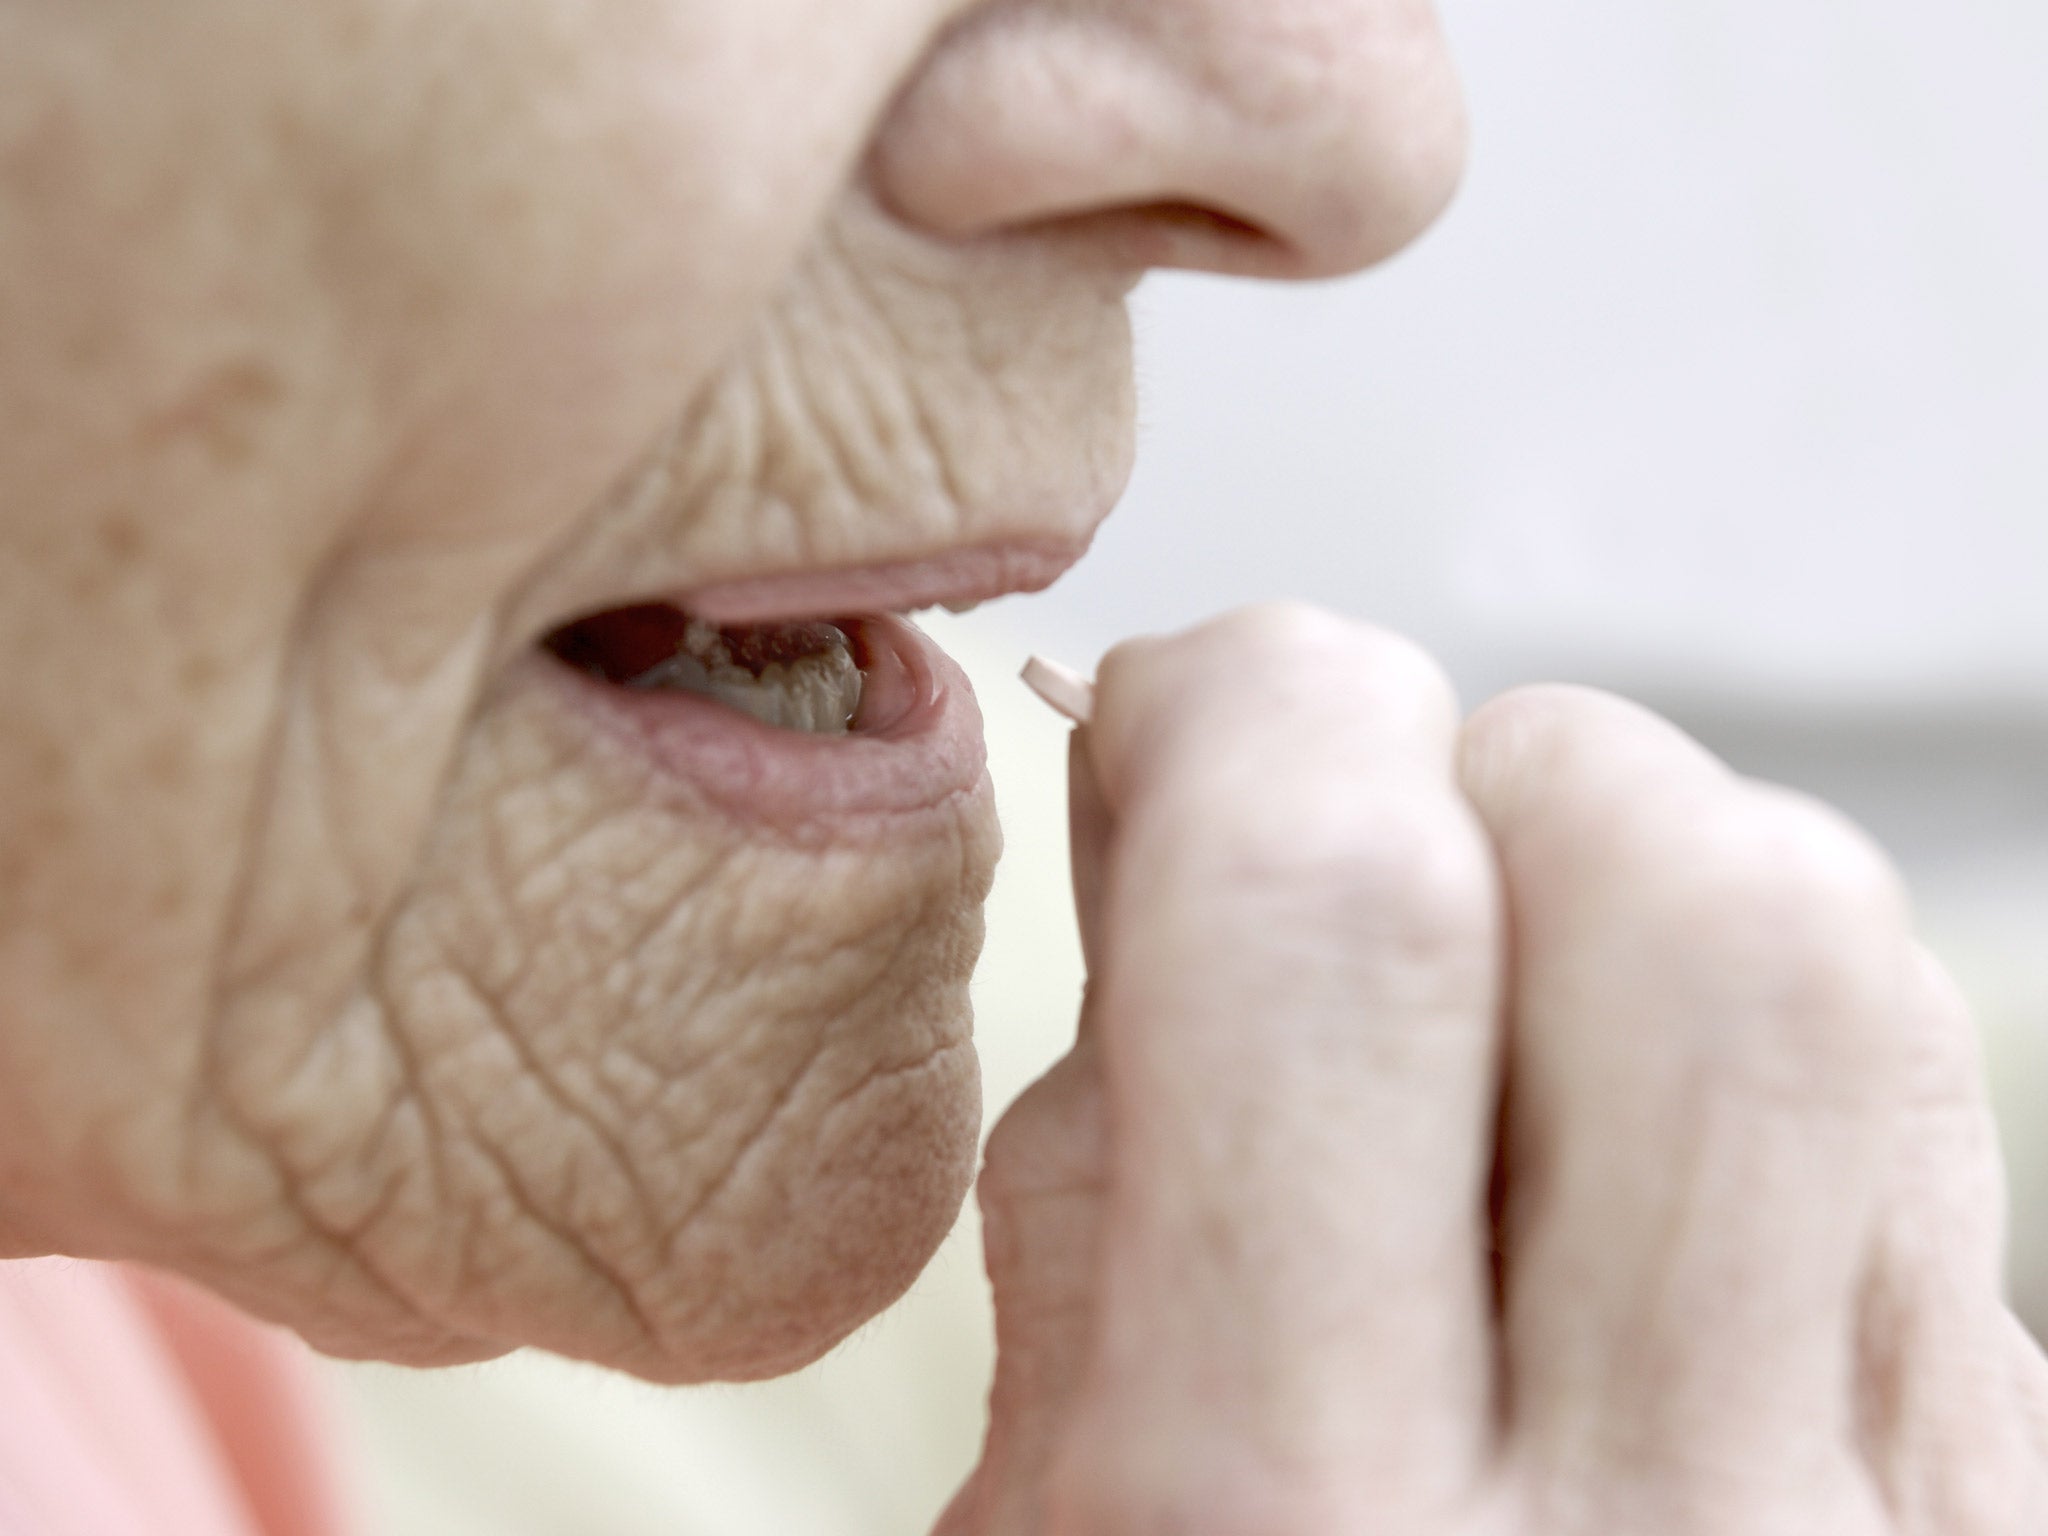 An elderly woman takes statin medication